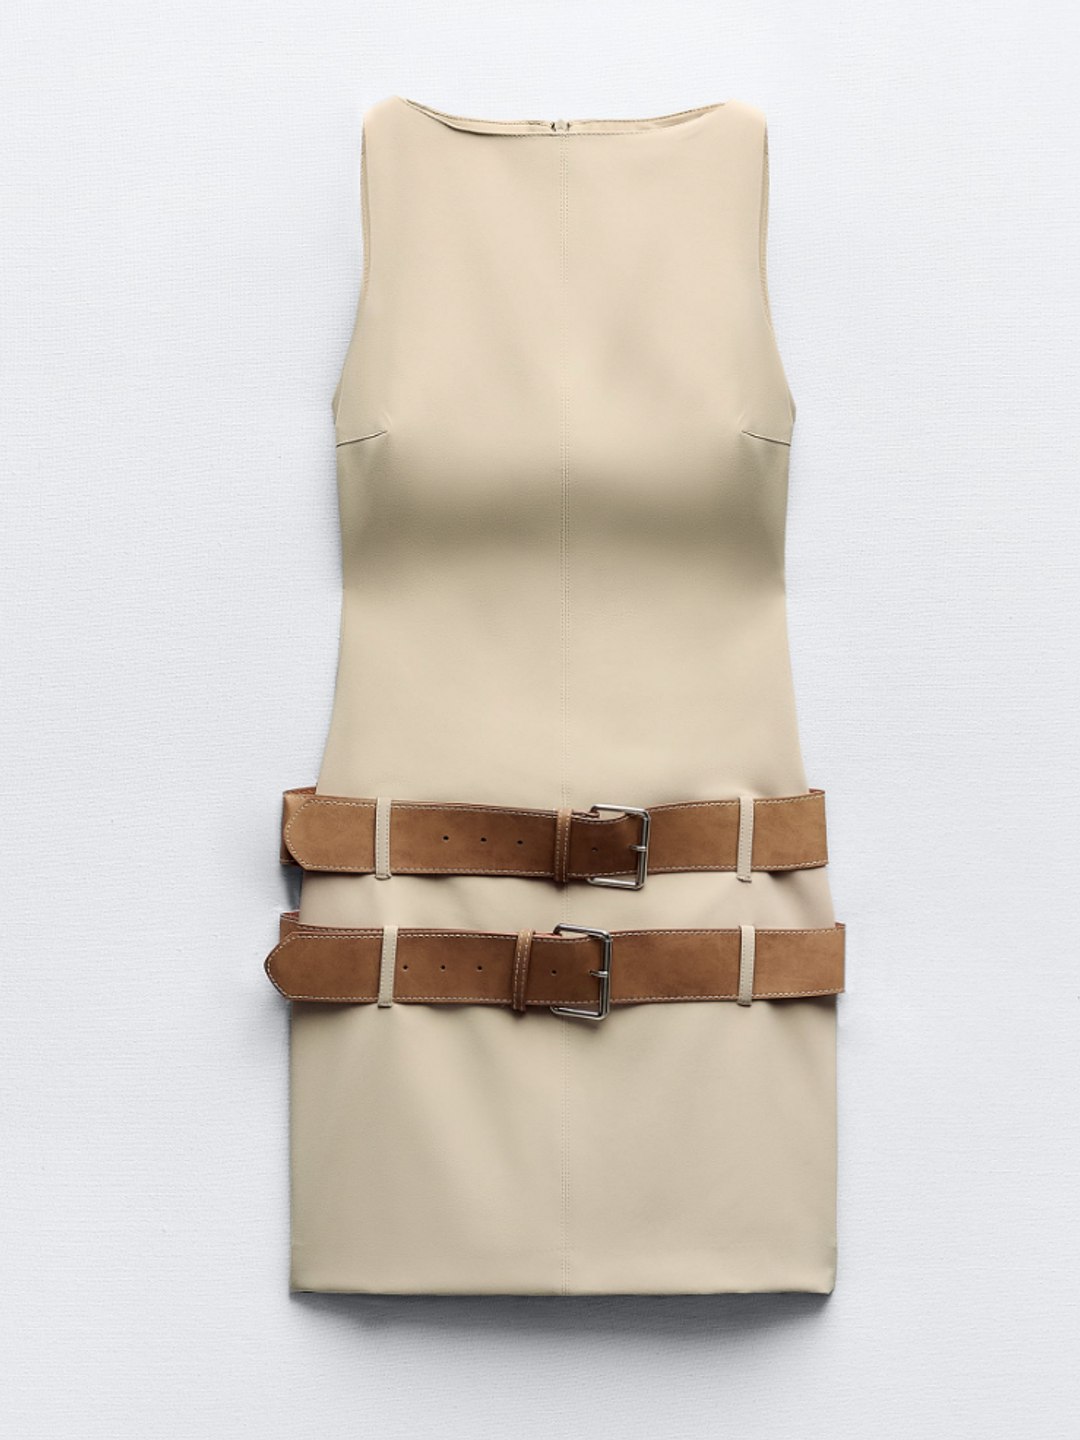 Zara cream dress with double belt detailing 